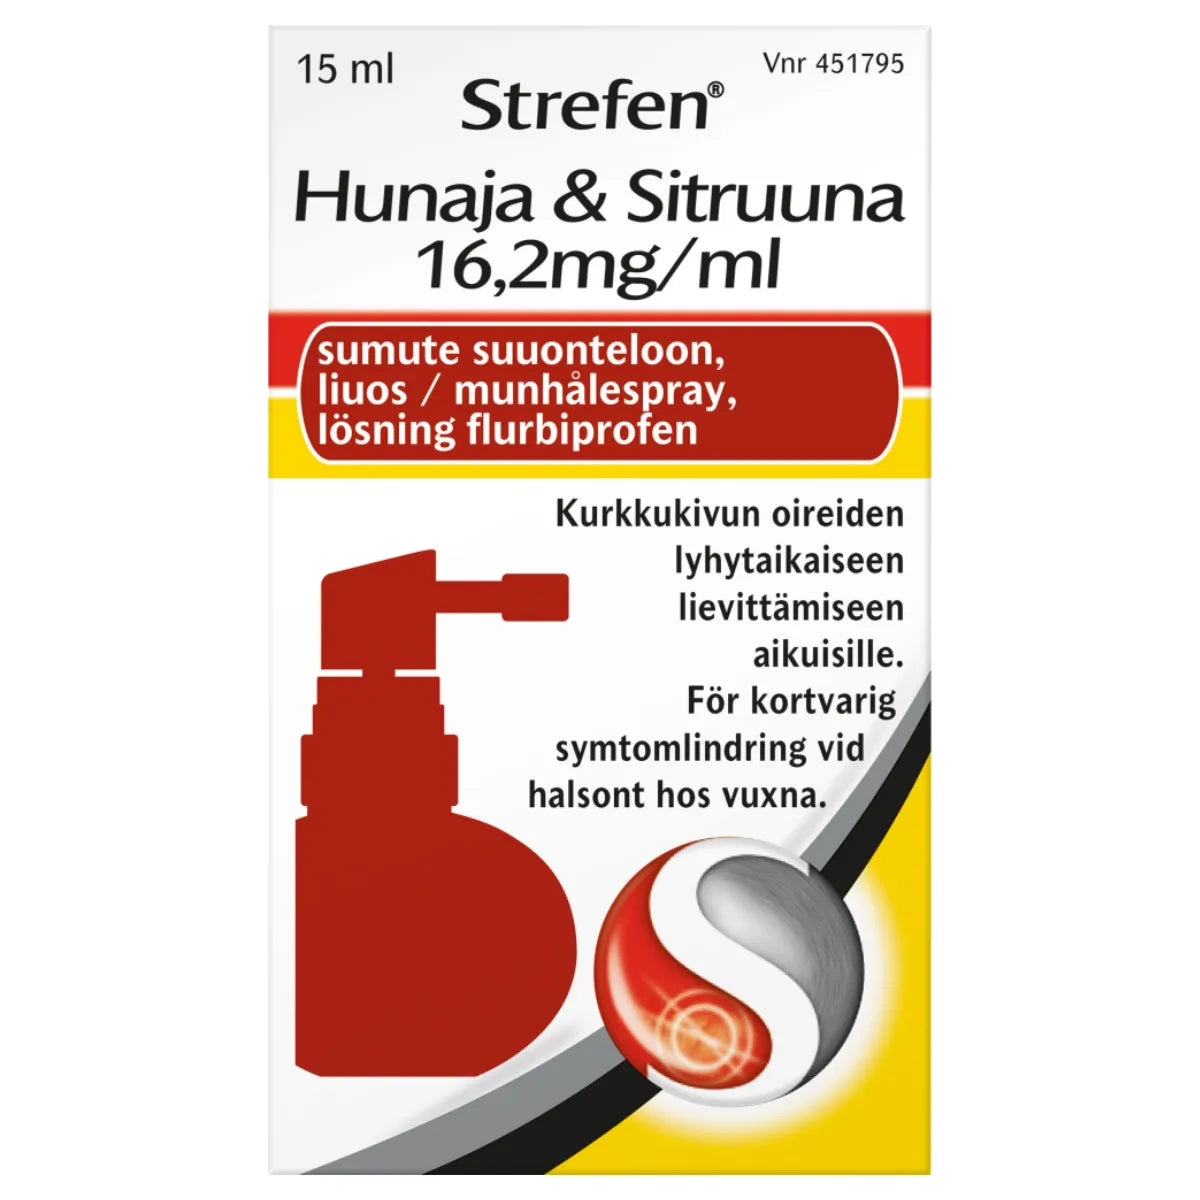 STREFEN Hunaja & Sitruuna 16,2 mg/ml sumute suuonteloon, liuos